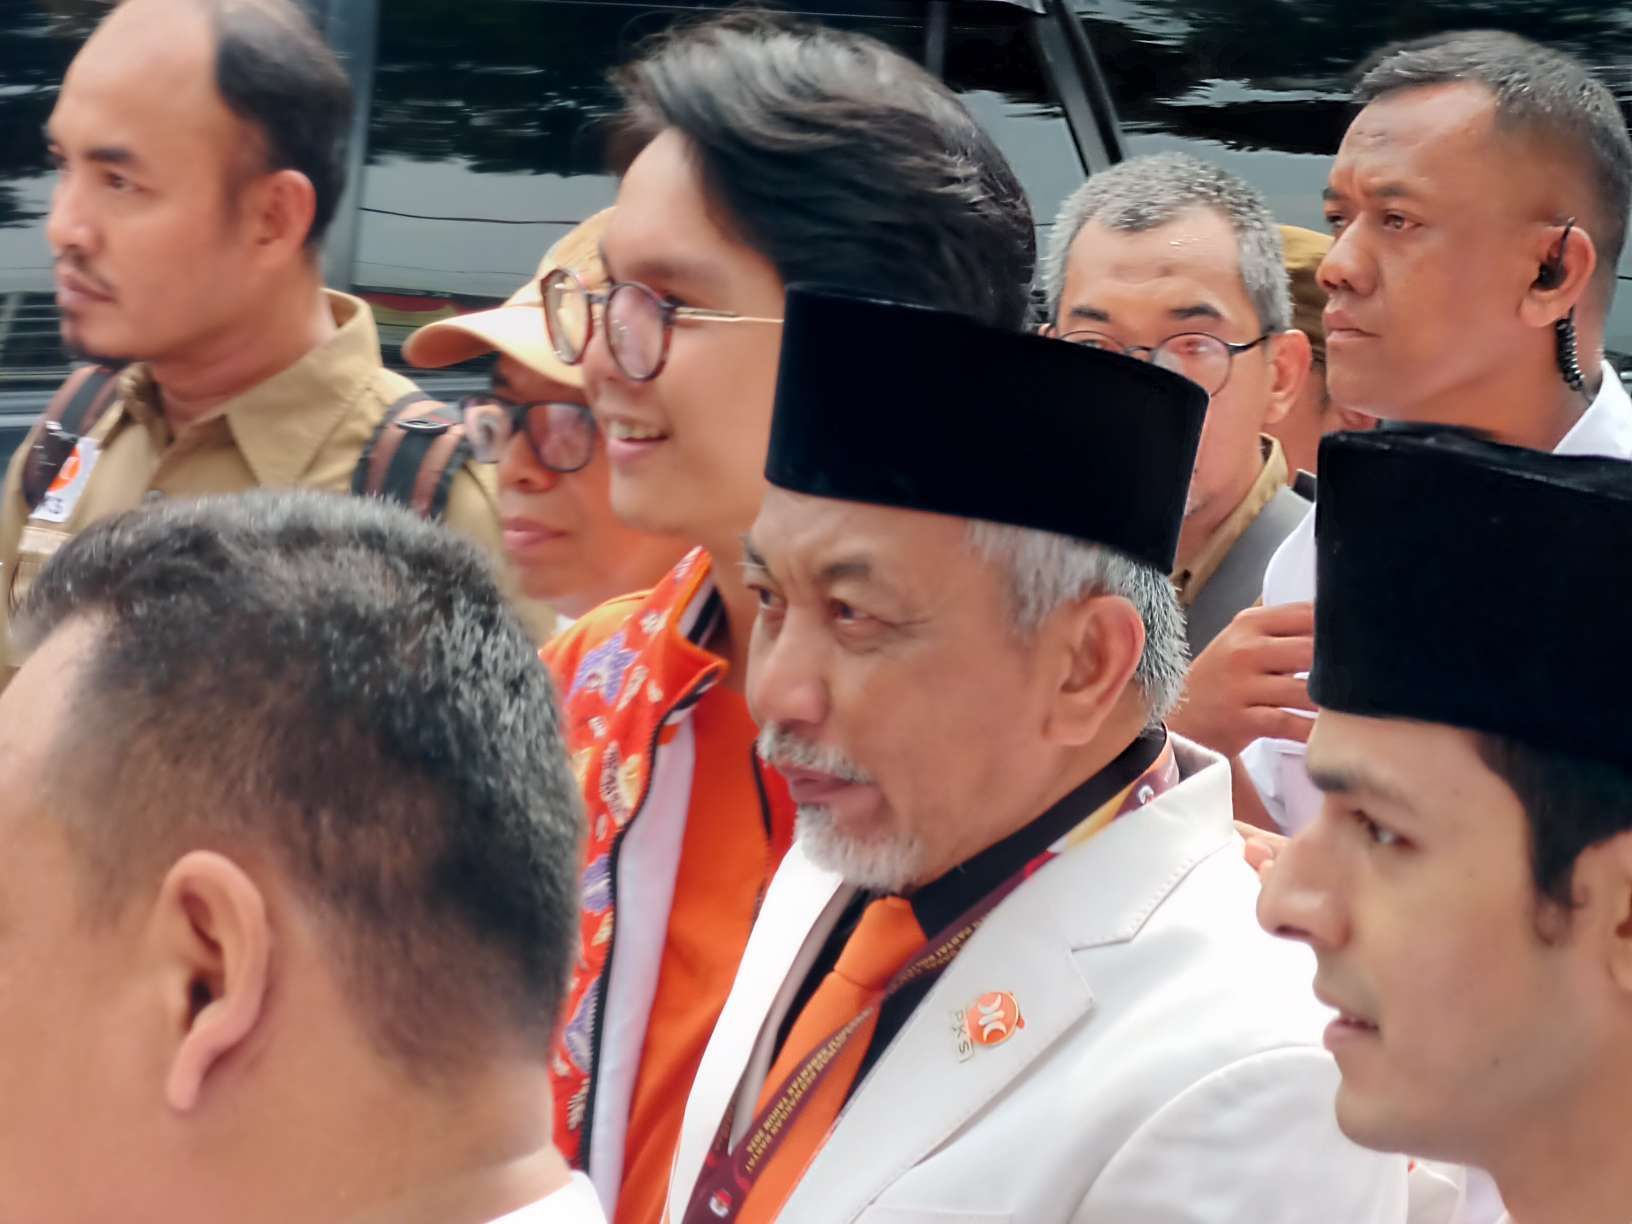 Johnny Plate Jadi Tersangka, Presiden PKS: Pencapresan Anies Jalan Terus, Koalisi Perubahan Solid